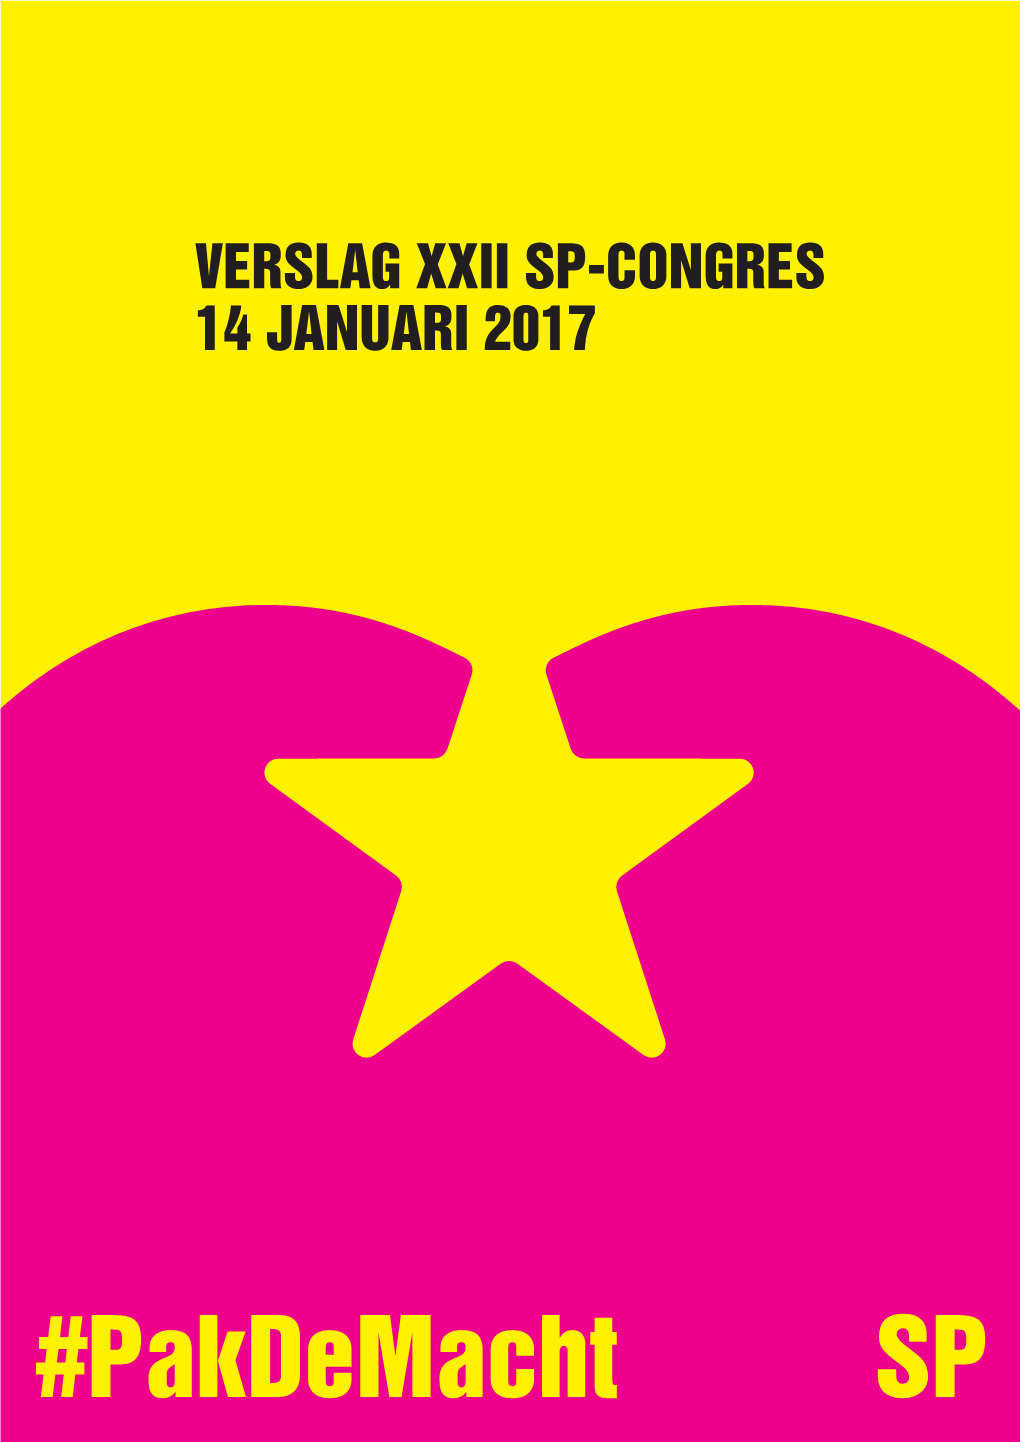 Verslag Xxii Sp-Congres 14 Januari 2017 Verslag Xxii Sp-Congres 14 Januari 2017